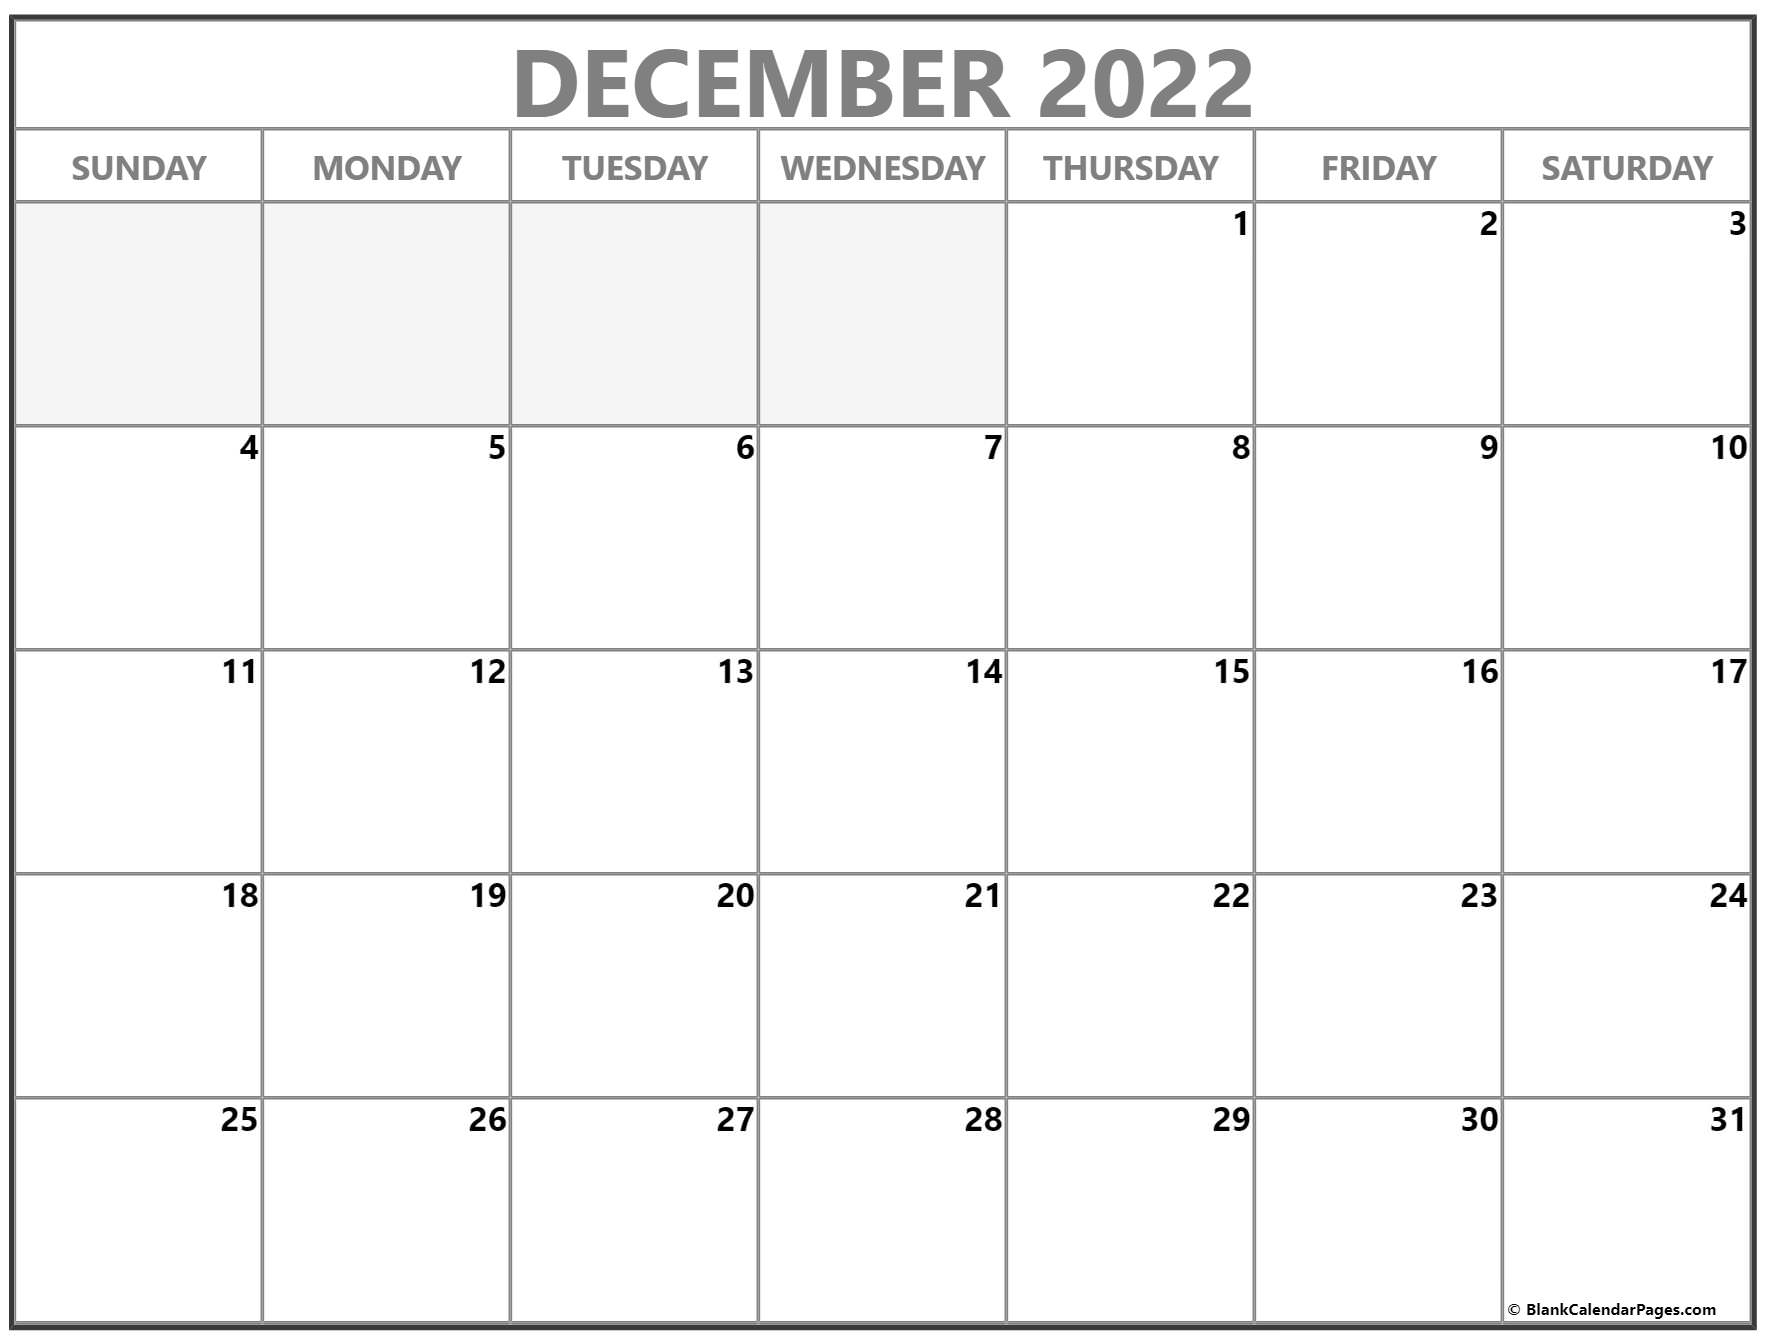 December 2022 Calendar | Free Printable Calendar Templates